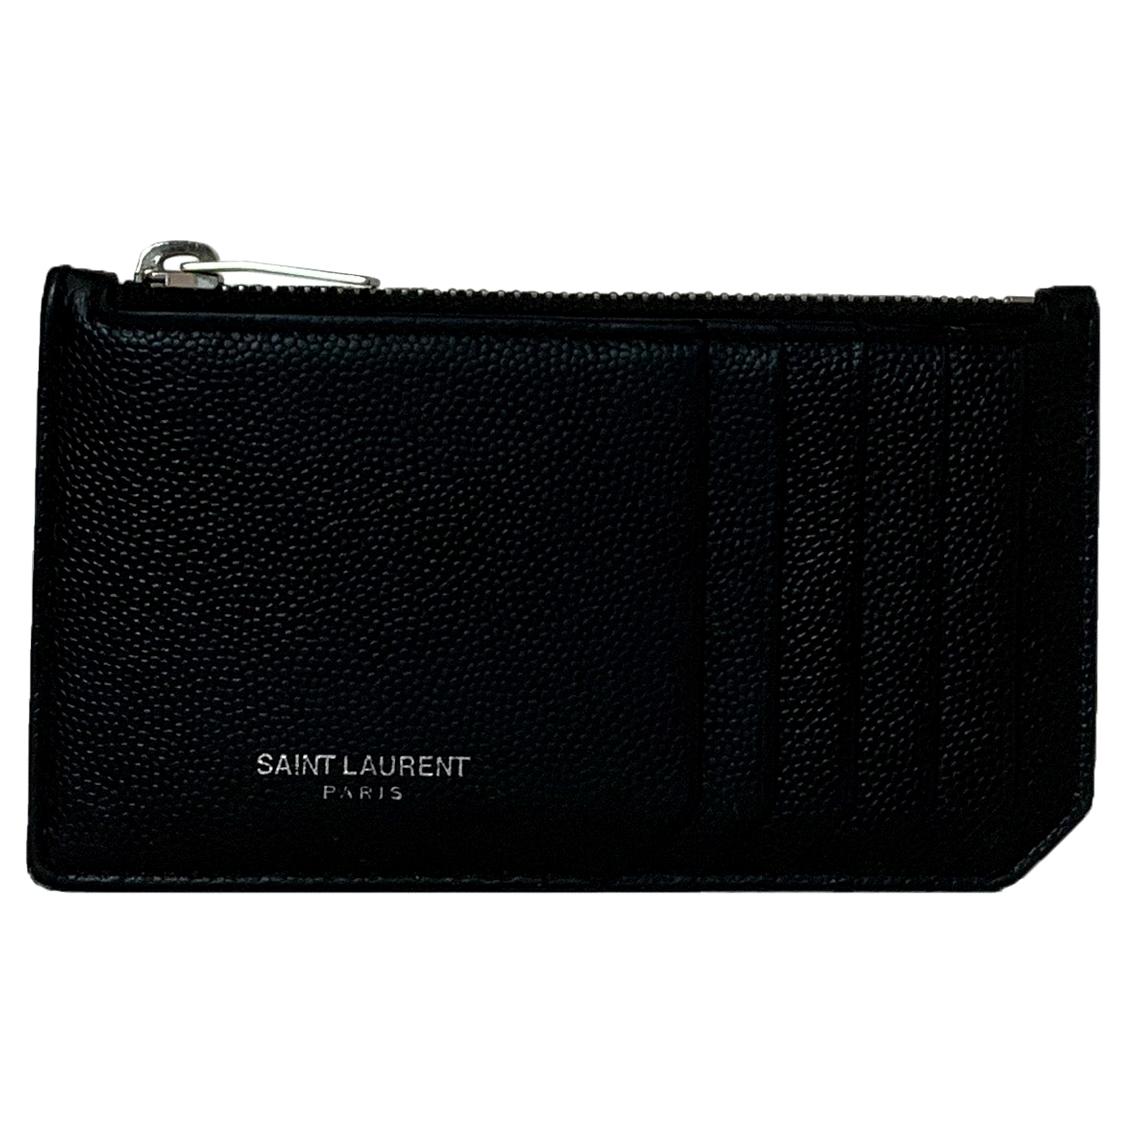 Saint Laurent Unisex Black Textured Leather Zip Top Card Holder rt. $295